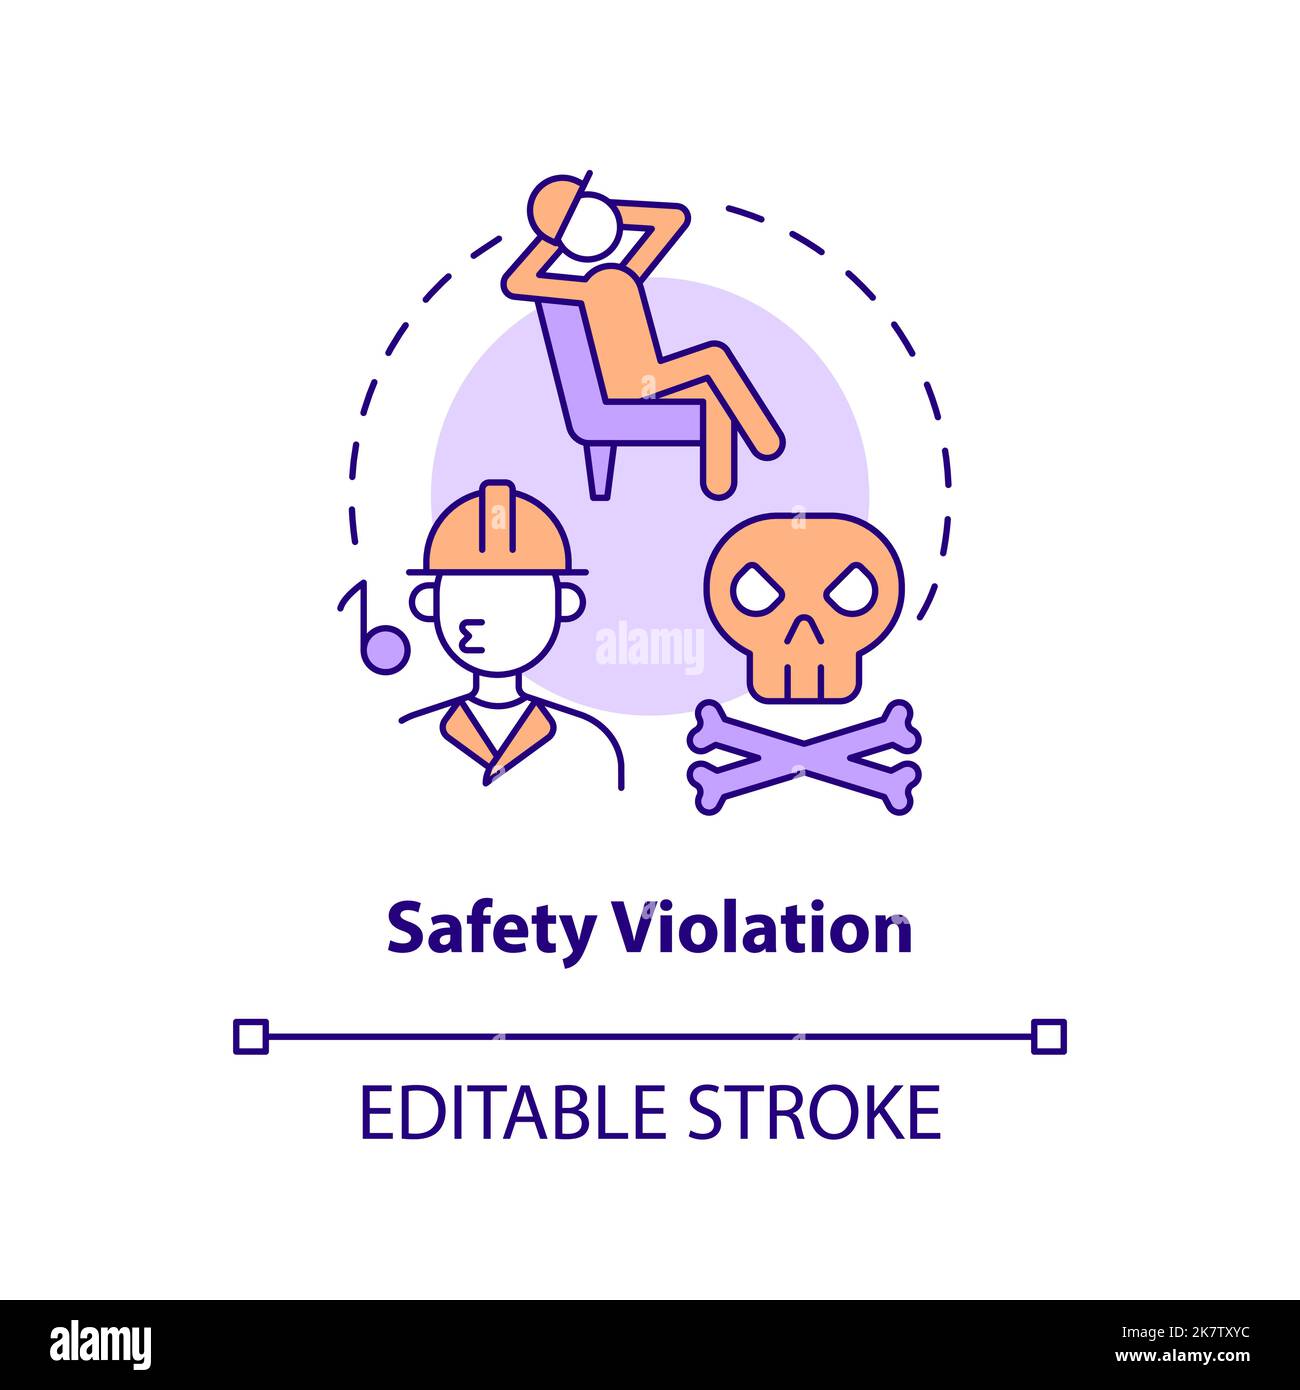 Safety violation concept icon Stock Vector